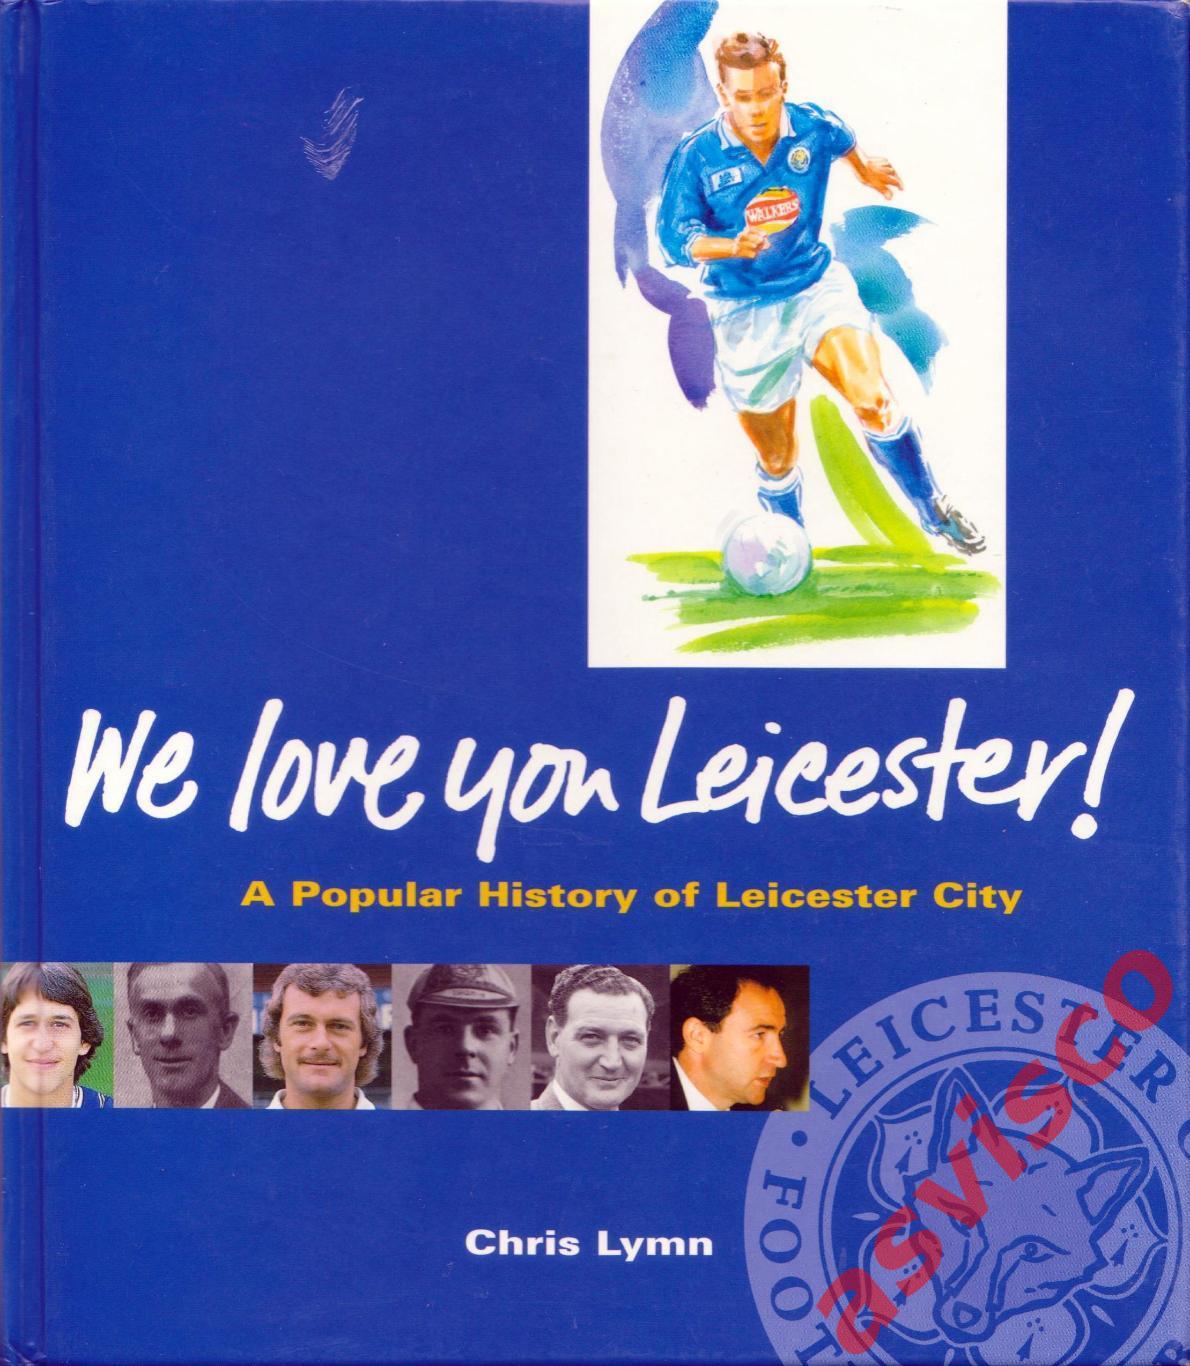 ФК Лестер Сити. Популярная история. We love you Leicester!